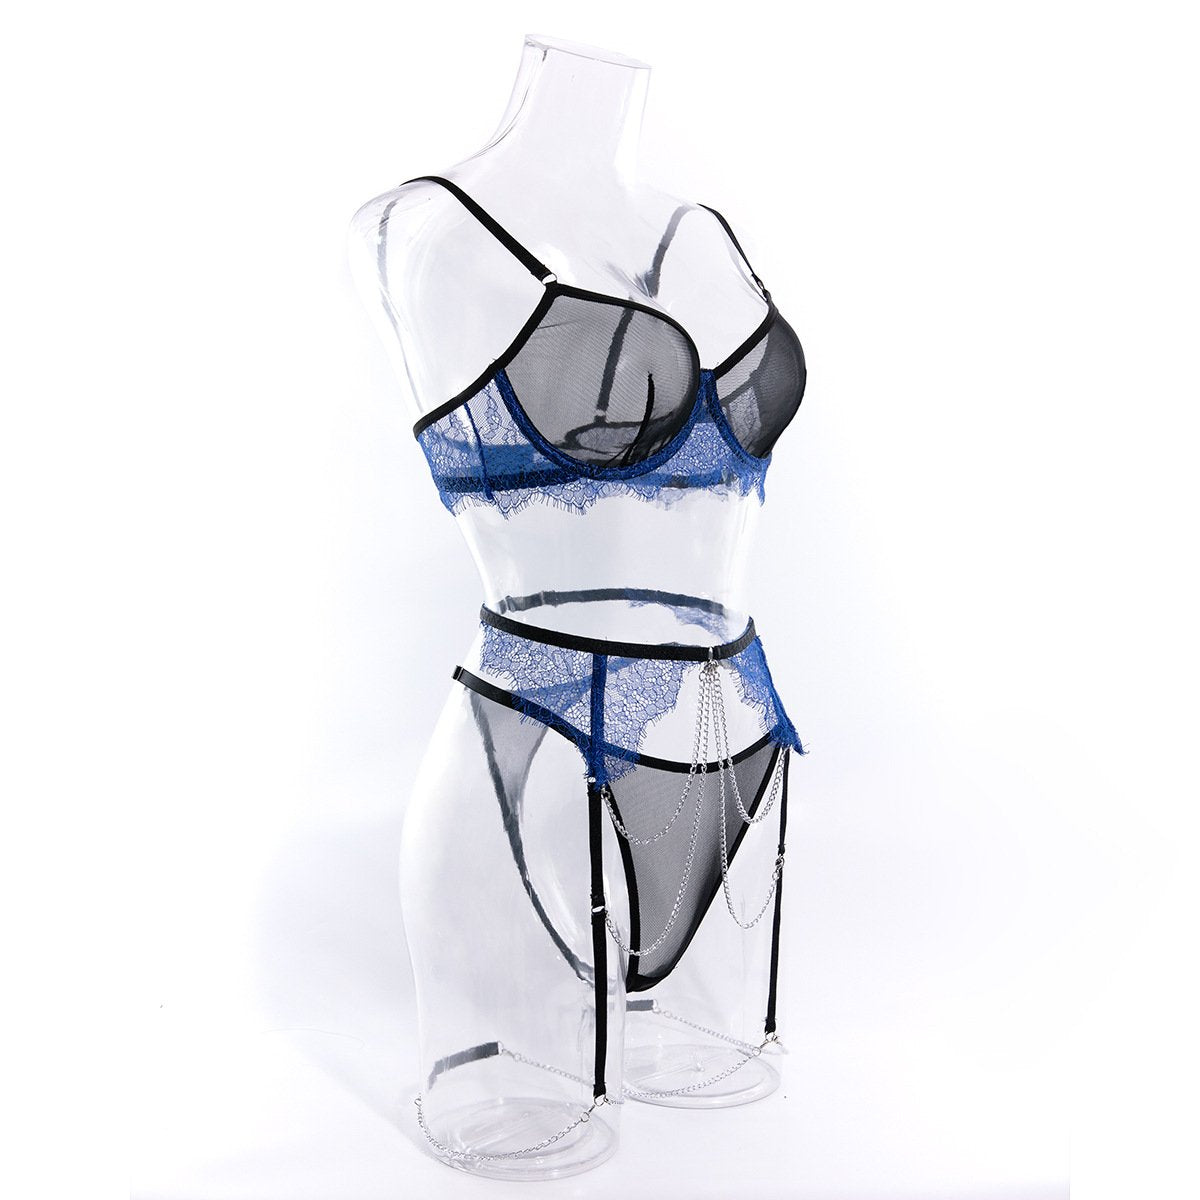 Metal chain lace hem mesh garter lingerie set